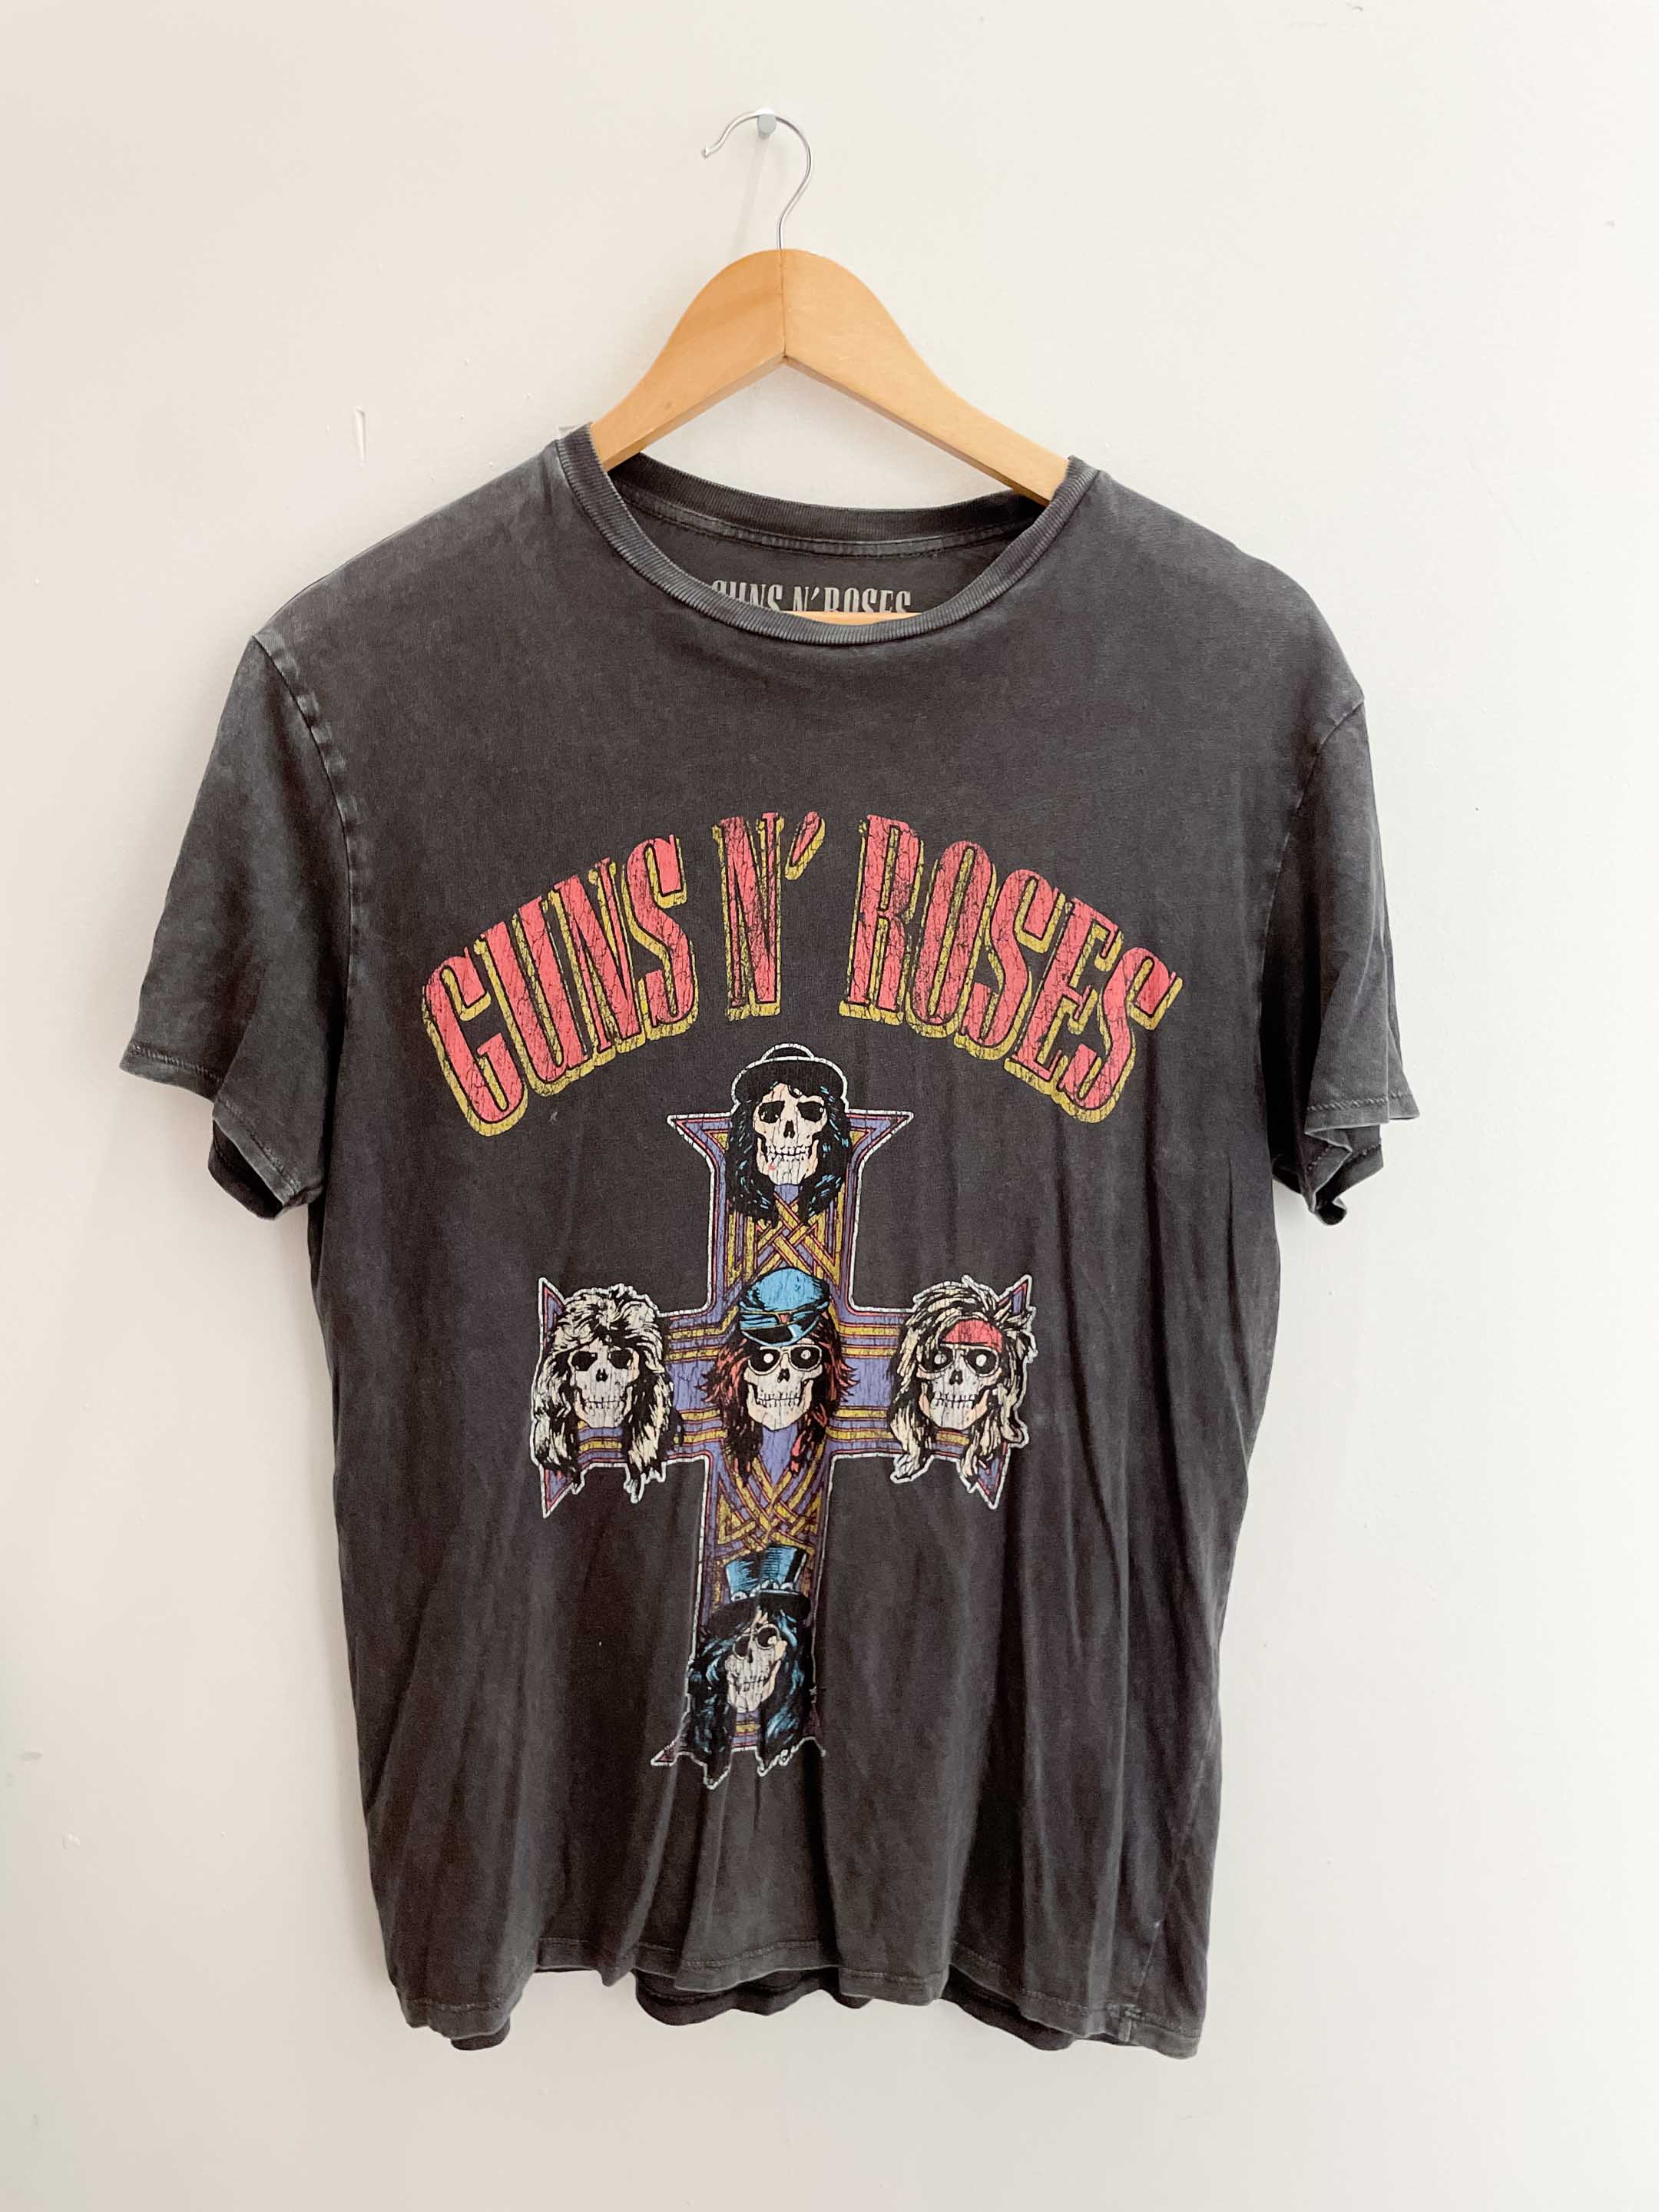 Vintage Pull & bear Guns & roses graphics mens grey tshirt size XS